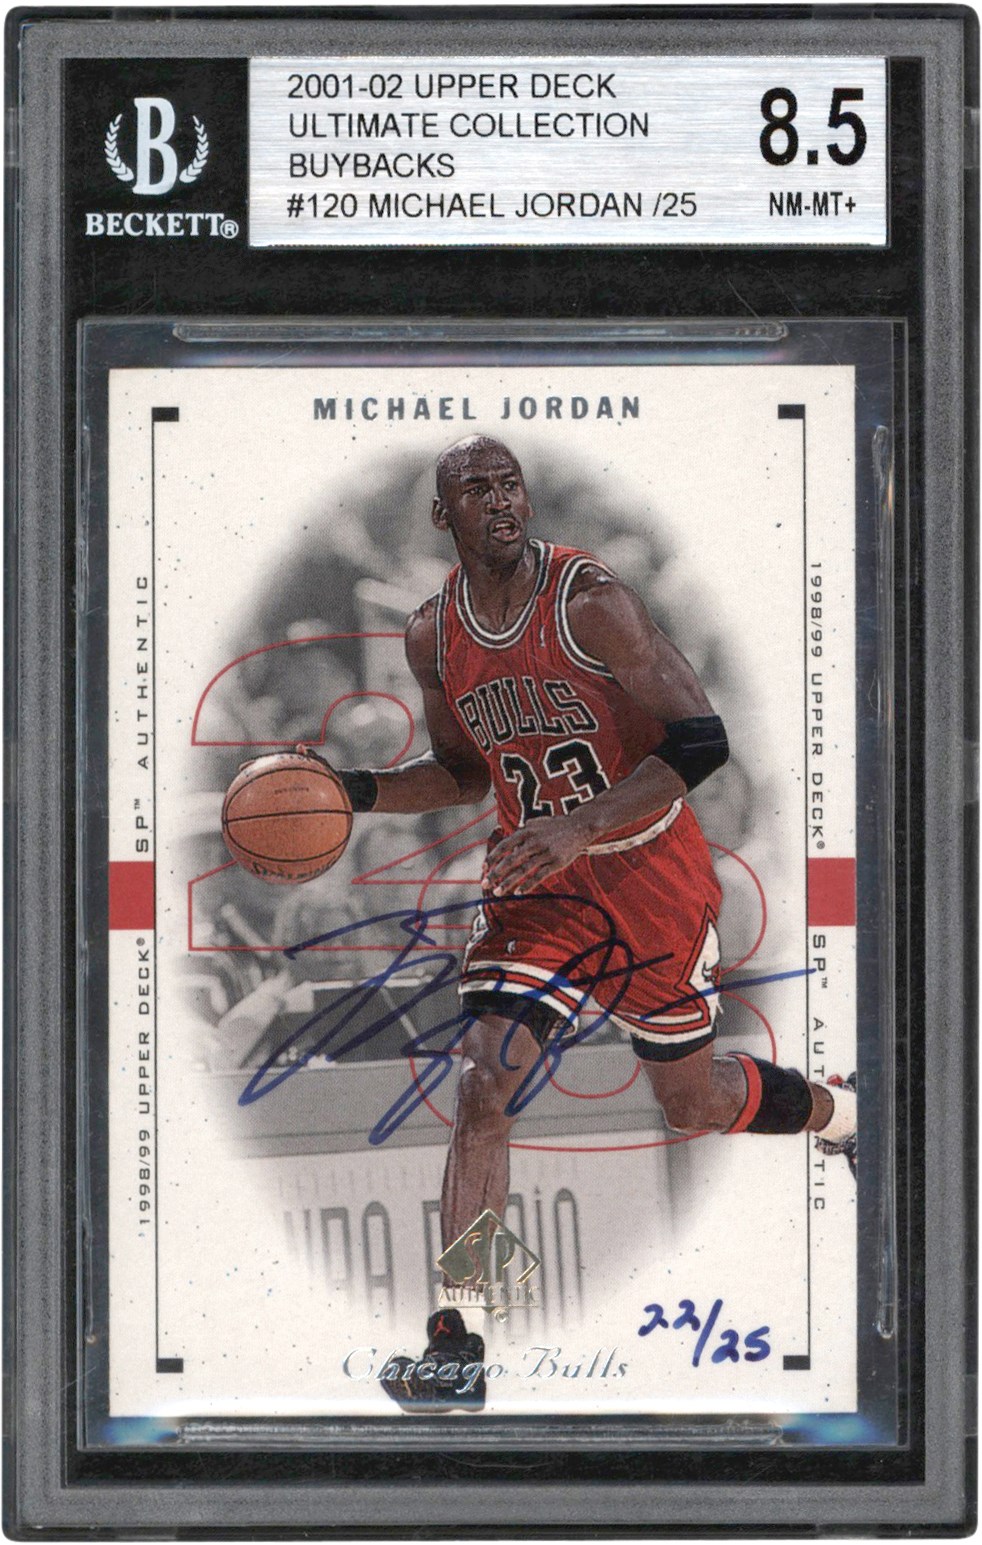 - 2001-2002 Upper Deck Ultimate Collection Basketball Buybacks #120 Michael Jordan Autograph Card #22/25 BGS NM-MT+ 8.5 Auto 10